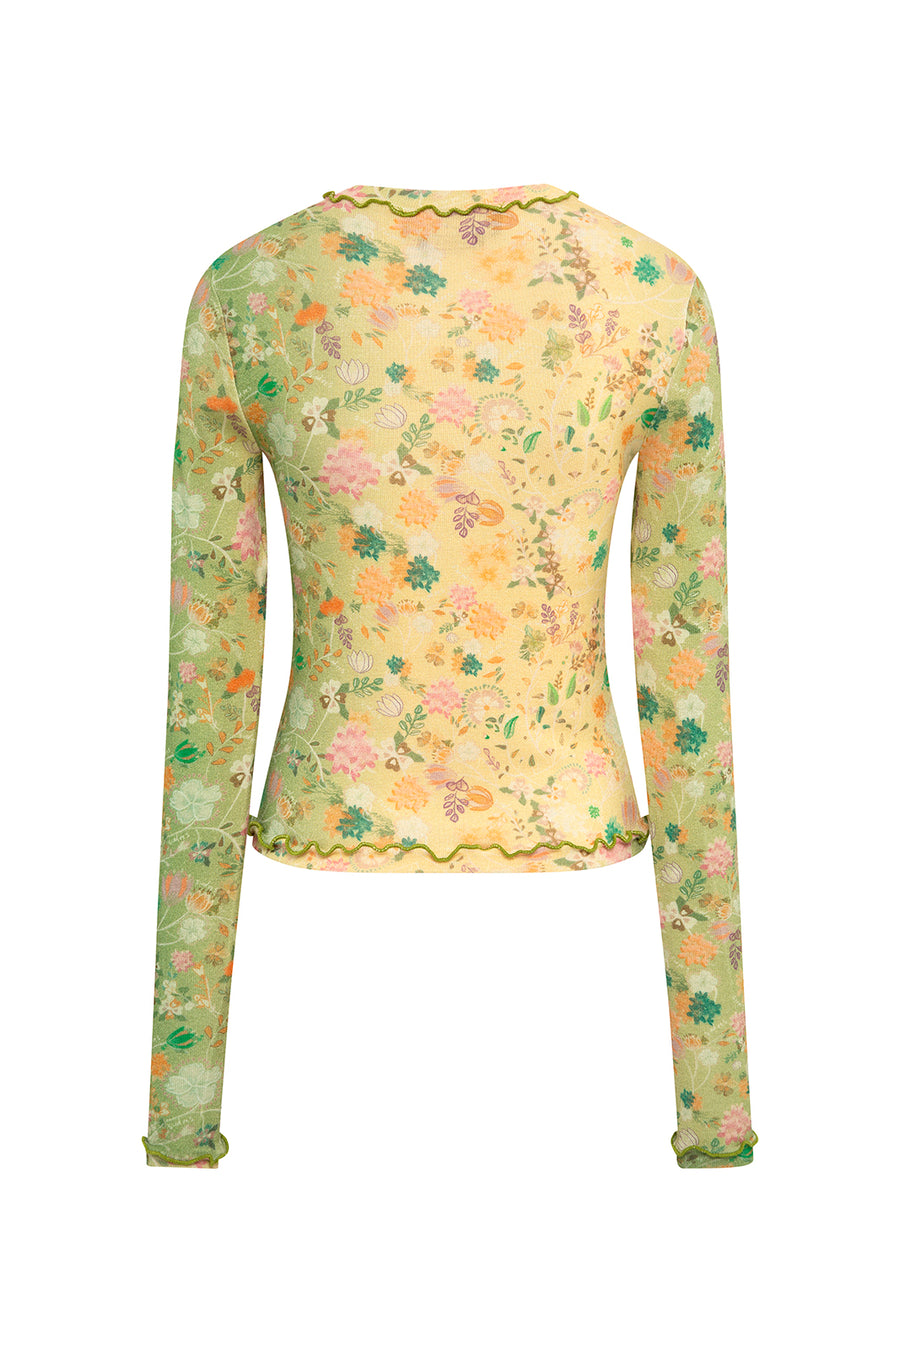 NITA - Floral printed knit top